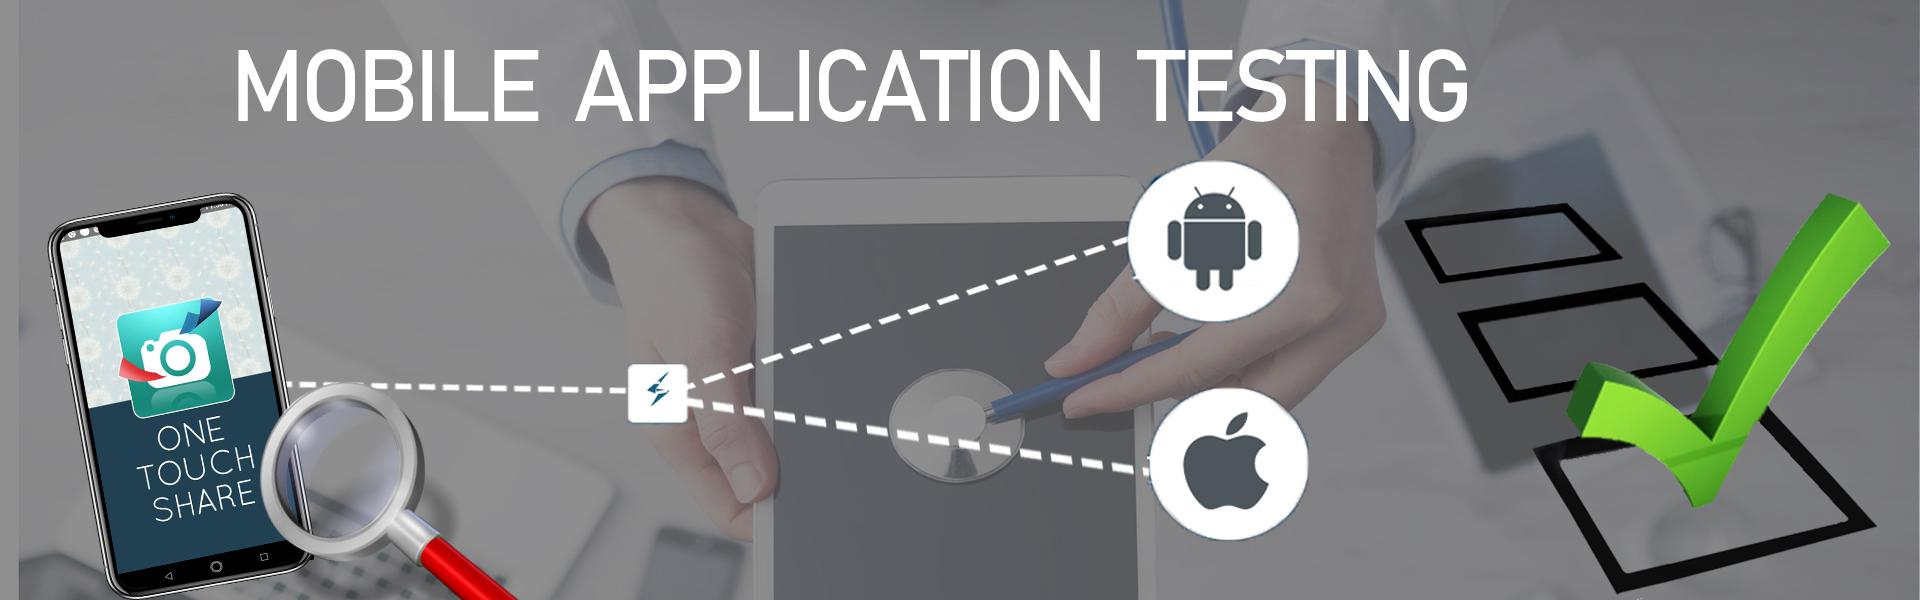 Mobile Application testing